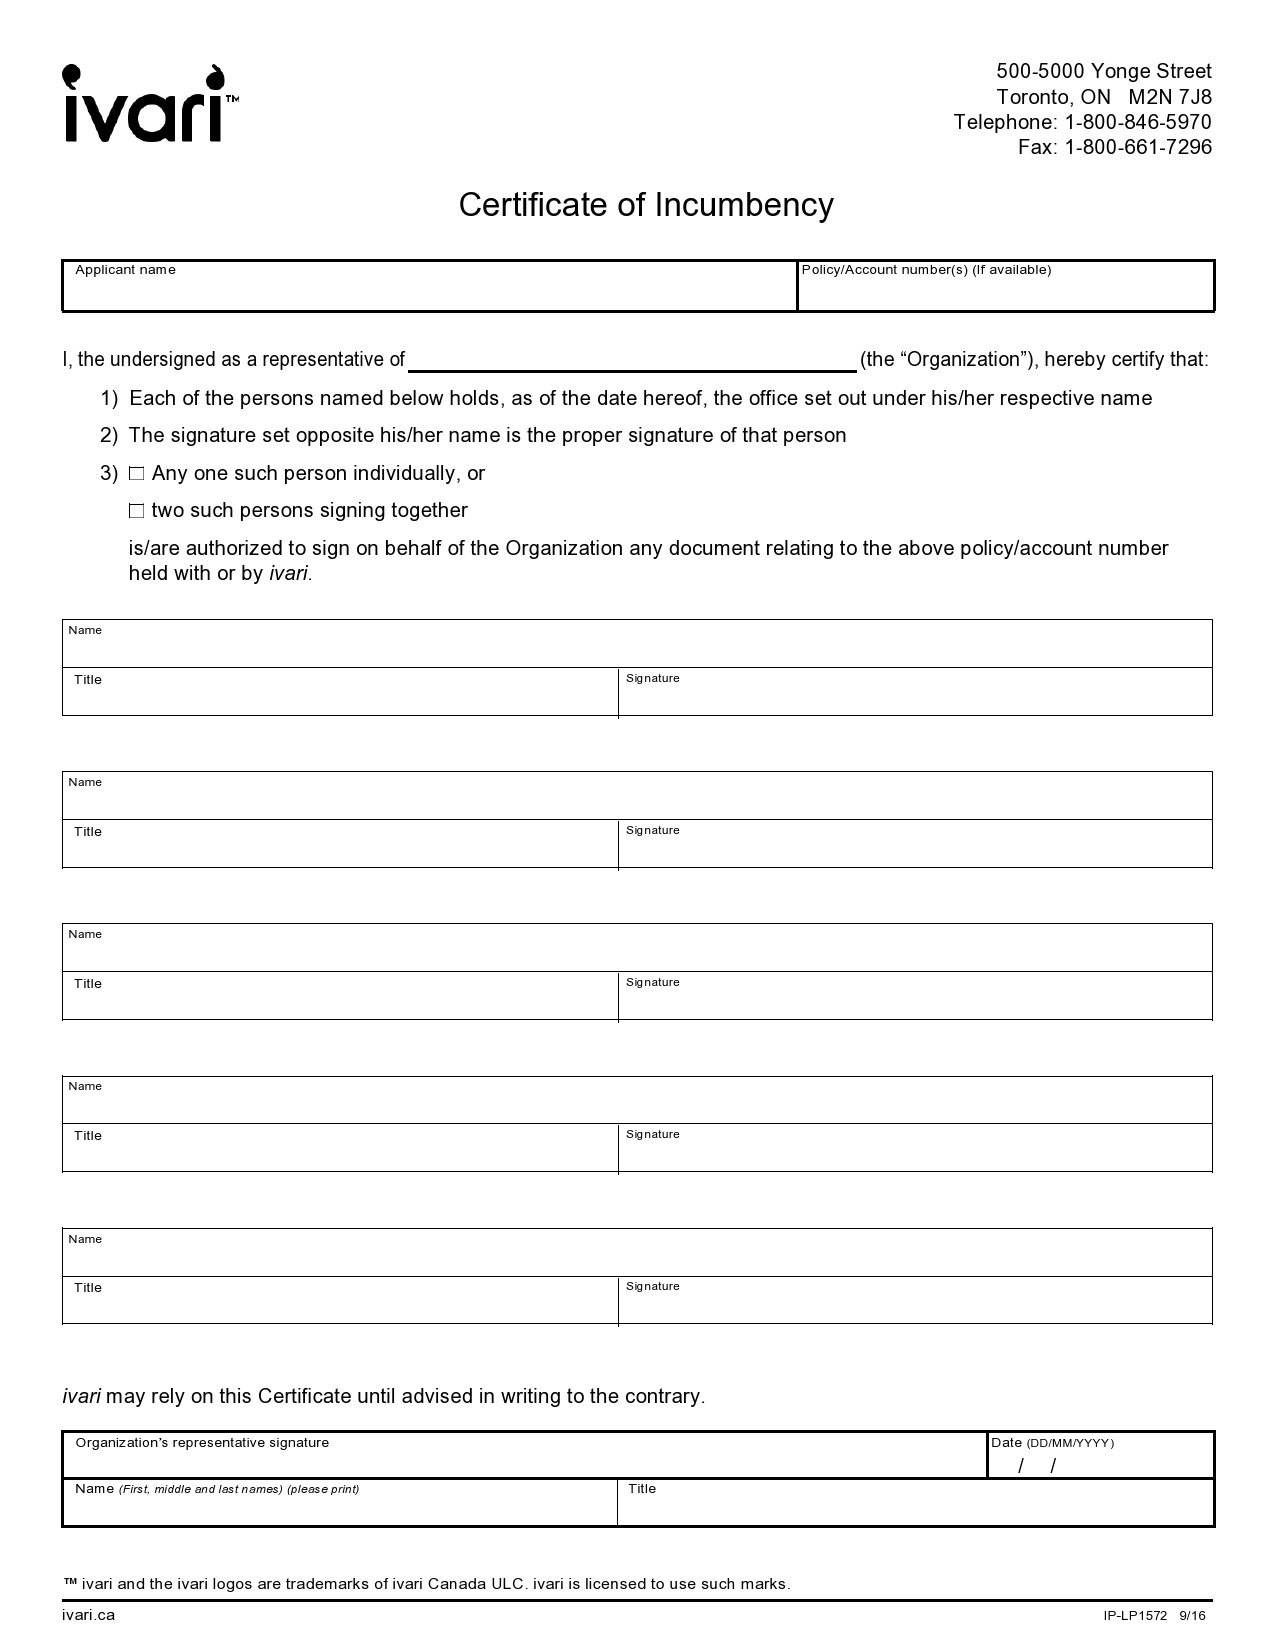 Free certificate of incumbency 43